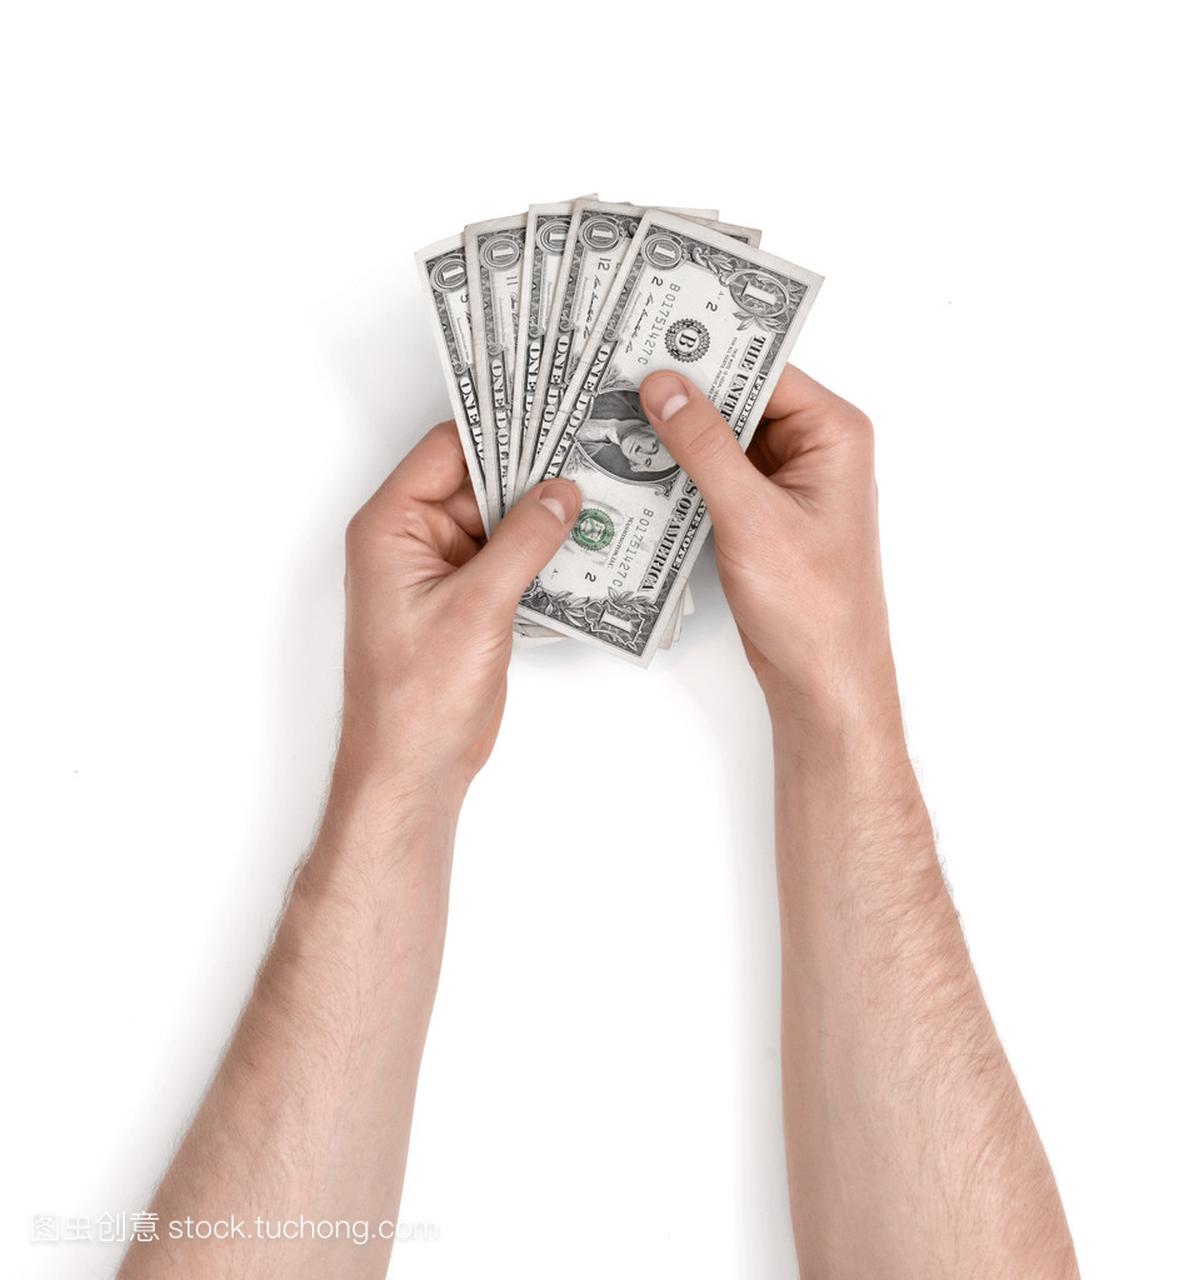 Hands of man holding one-dollar bills on 